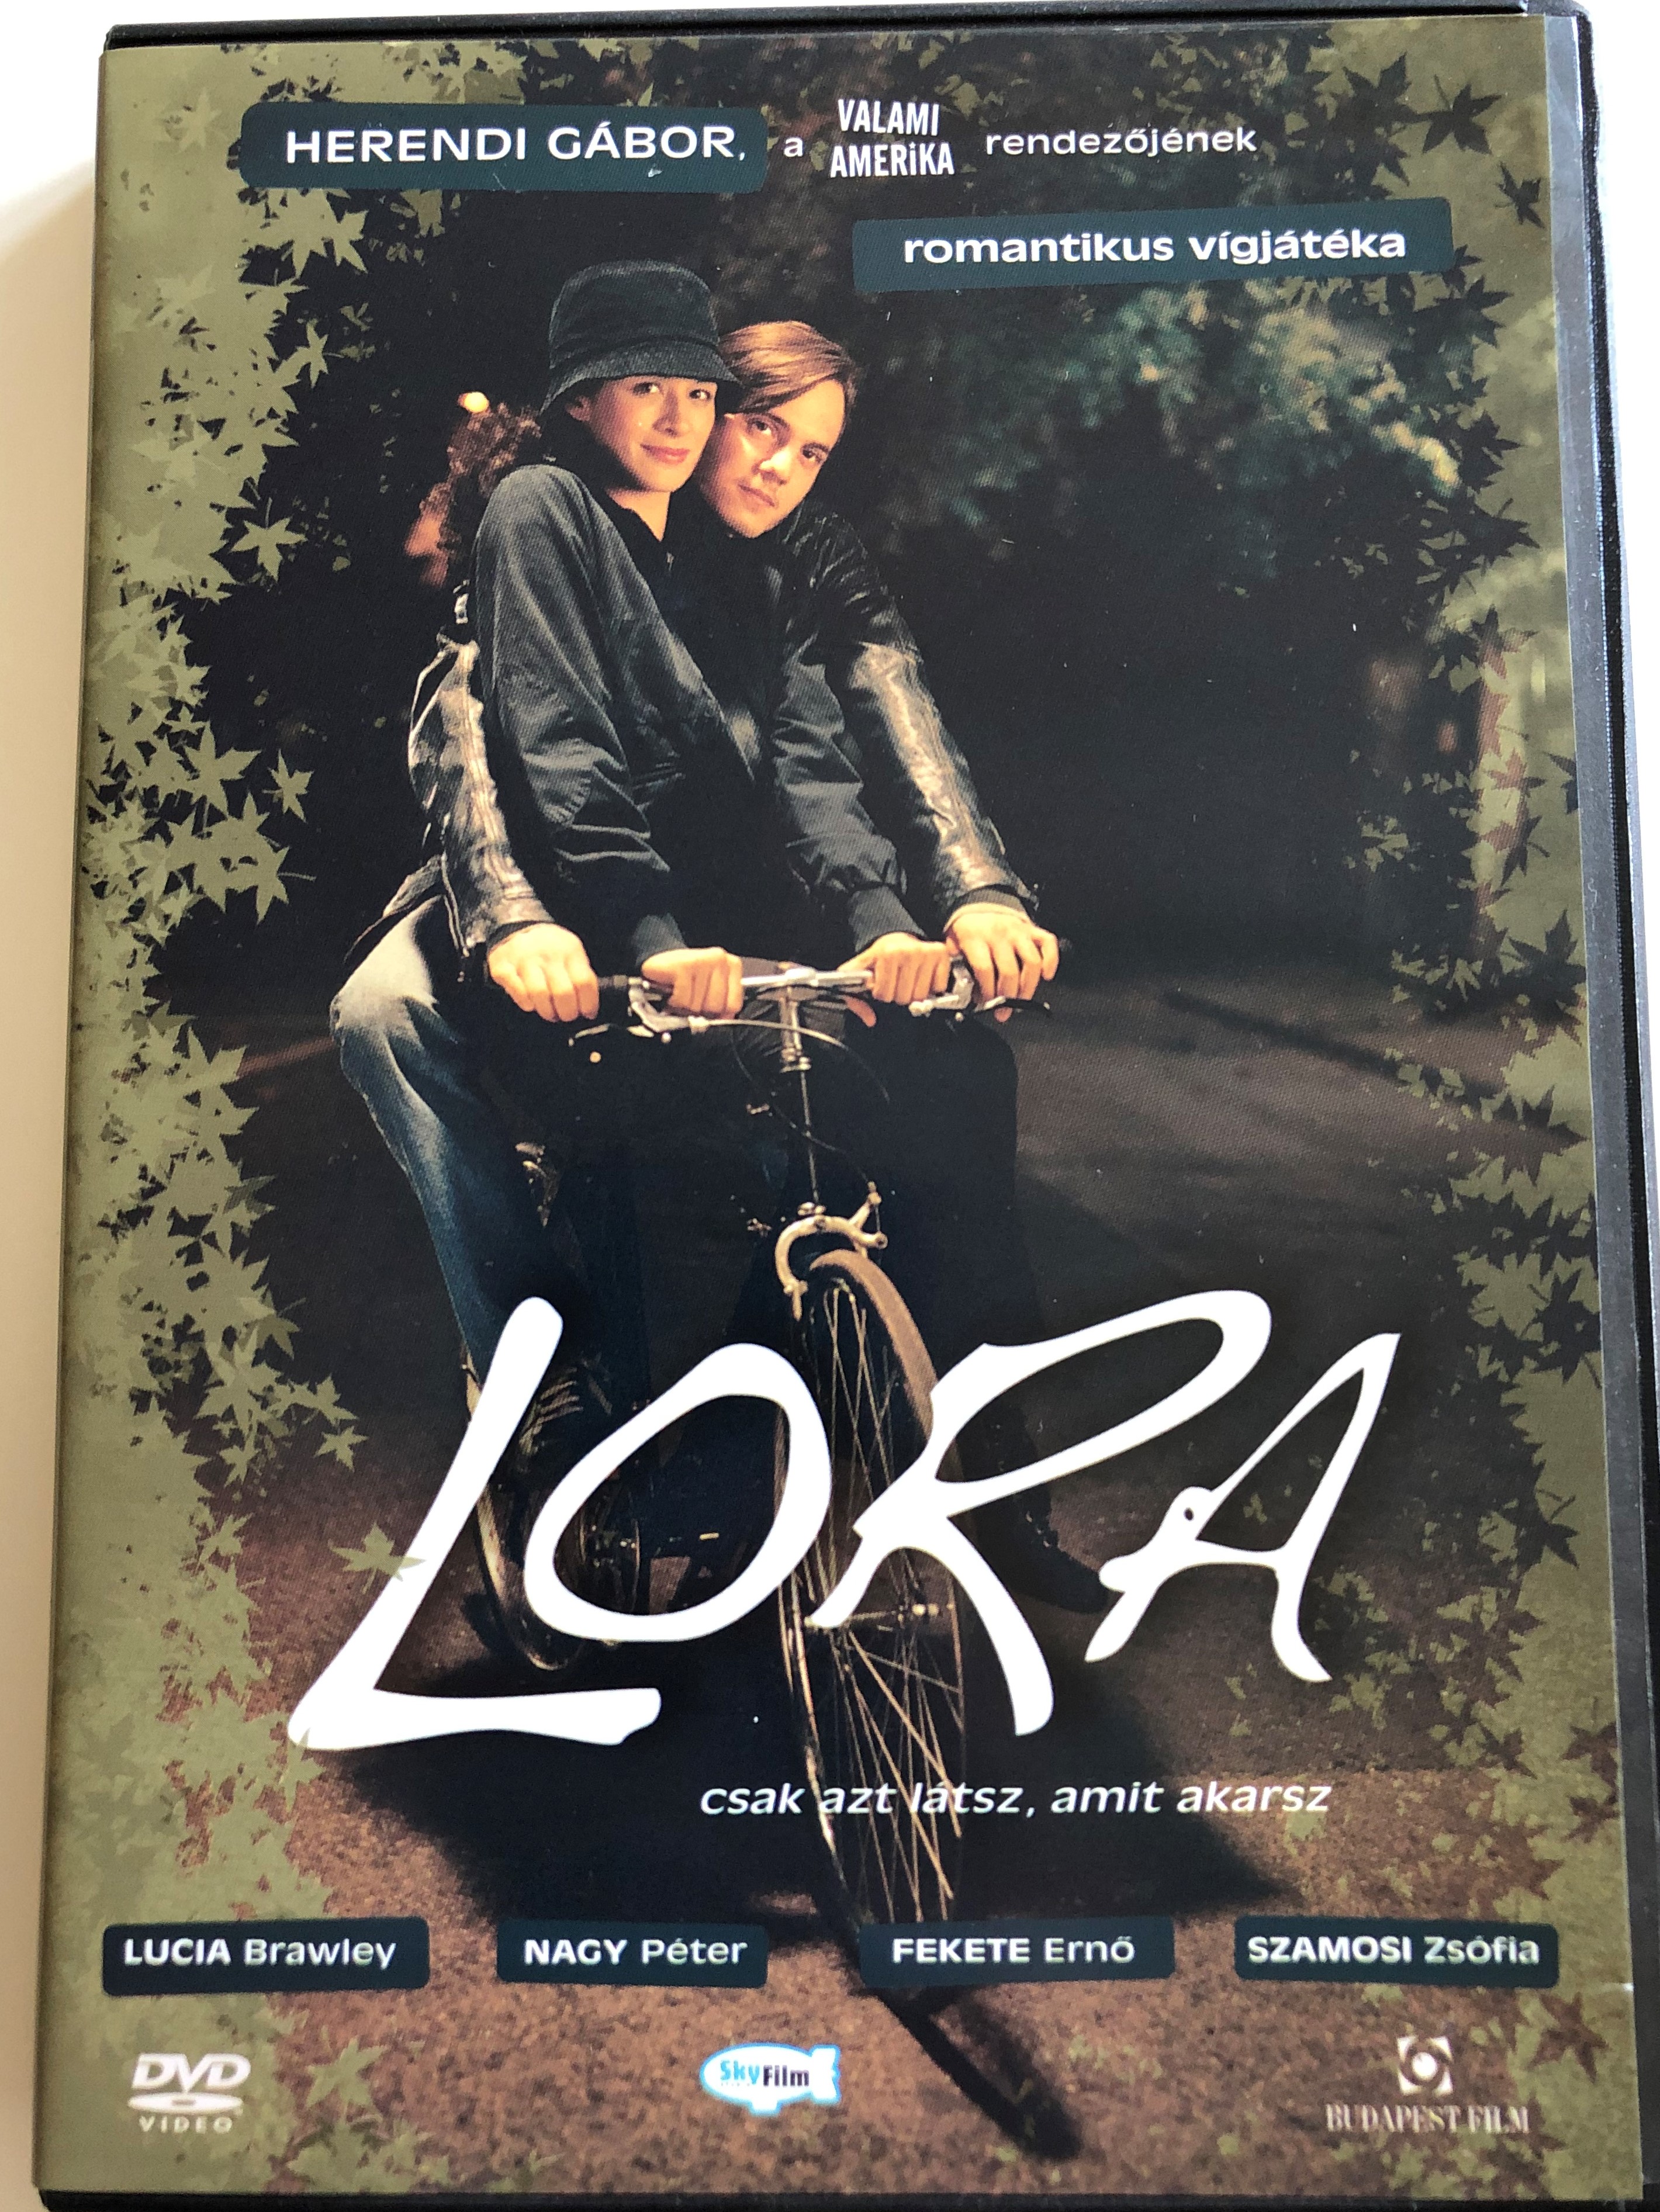 lora-dvd-2006-directed-by-herendi-g-bor-starring-lucia-brawley-fekete-ern-nagy-p-ter-szamosi-zs-fia-1-.jpg